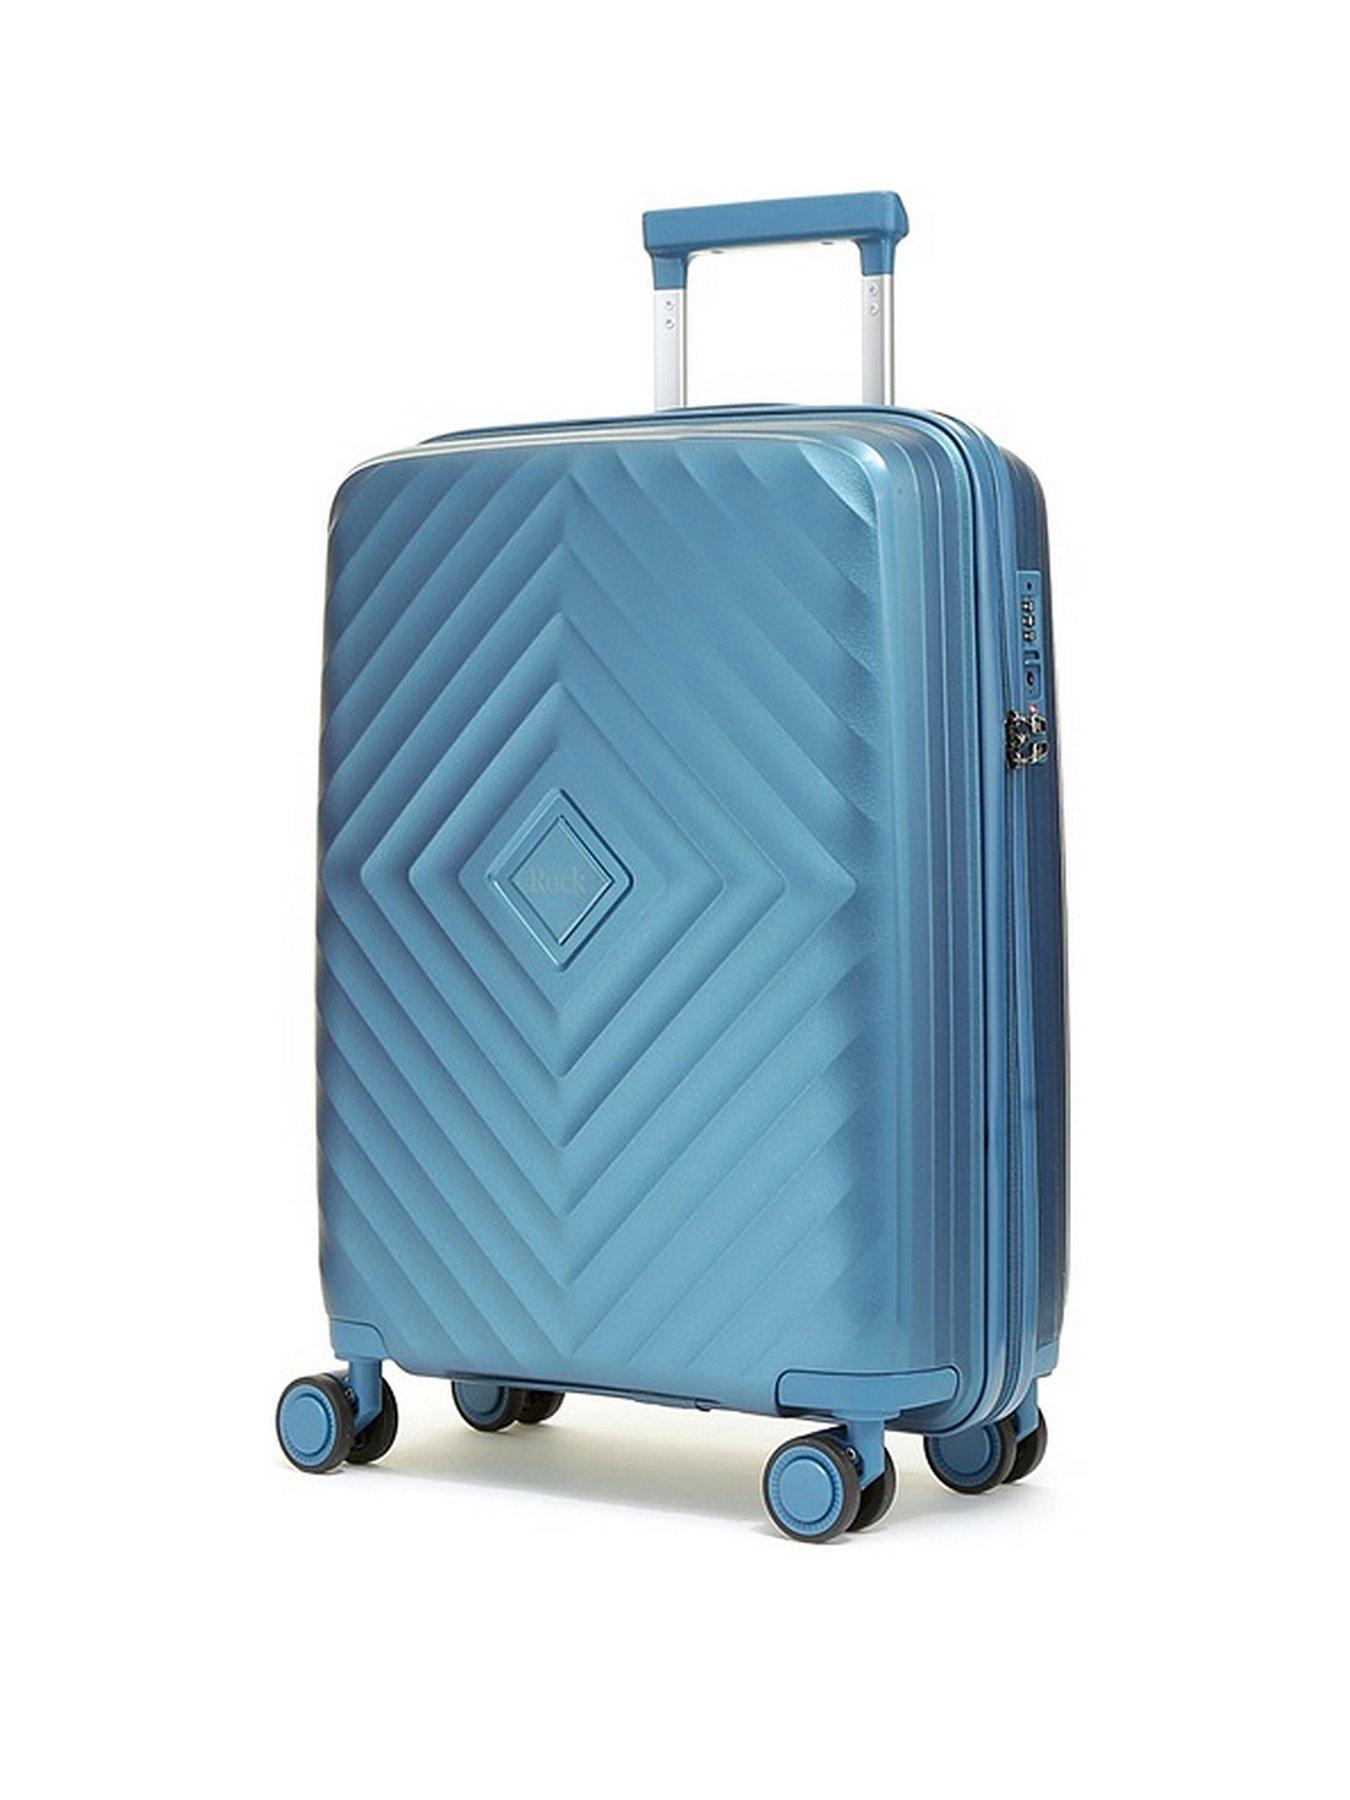 WestWood Suitcase Cabin Hard Shell Travel Luggage Trolley Case Set  Lightweight